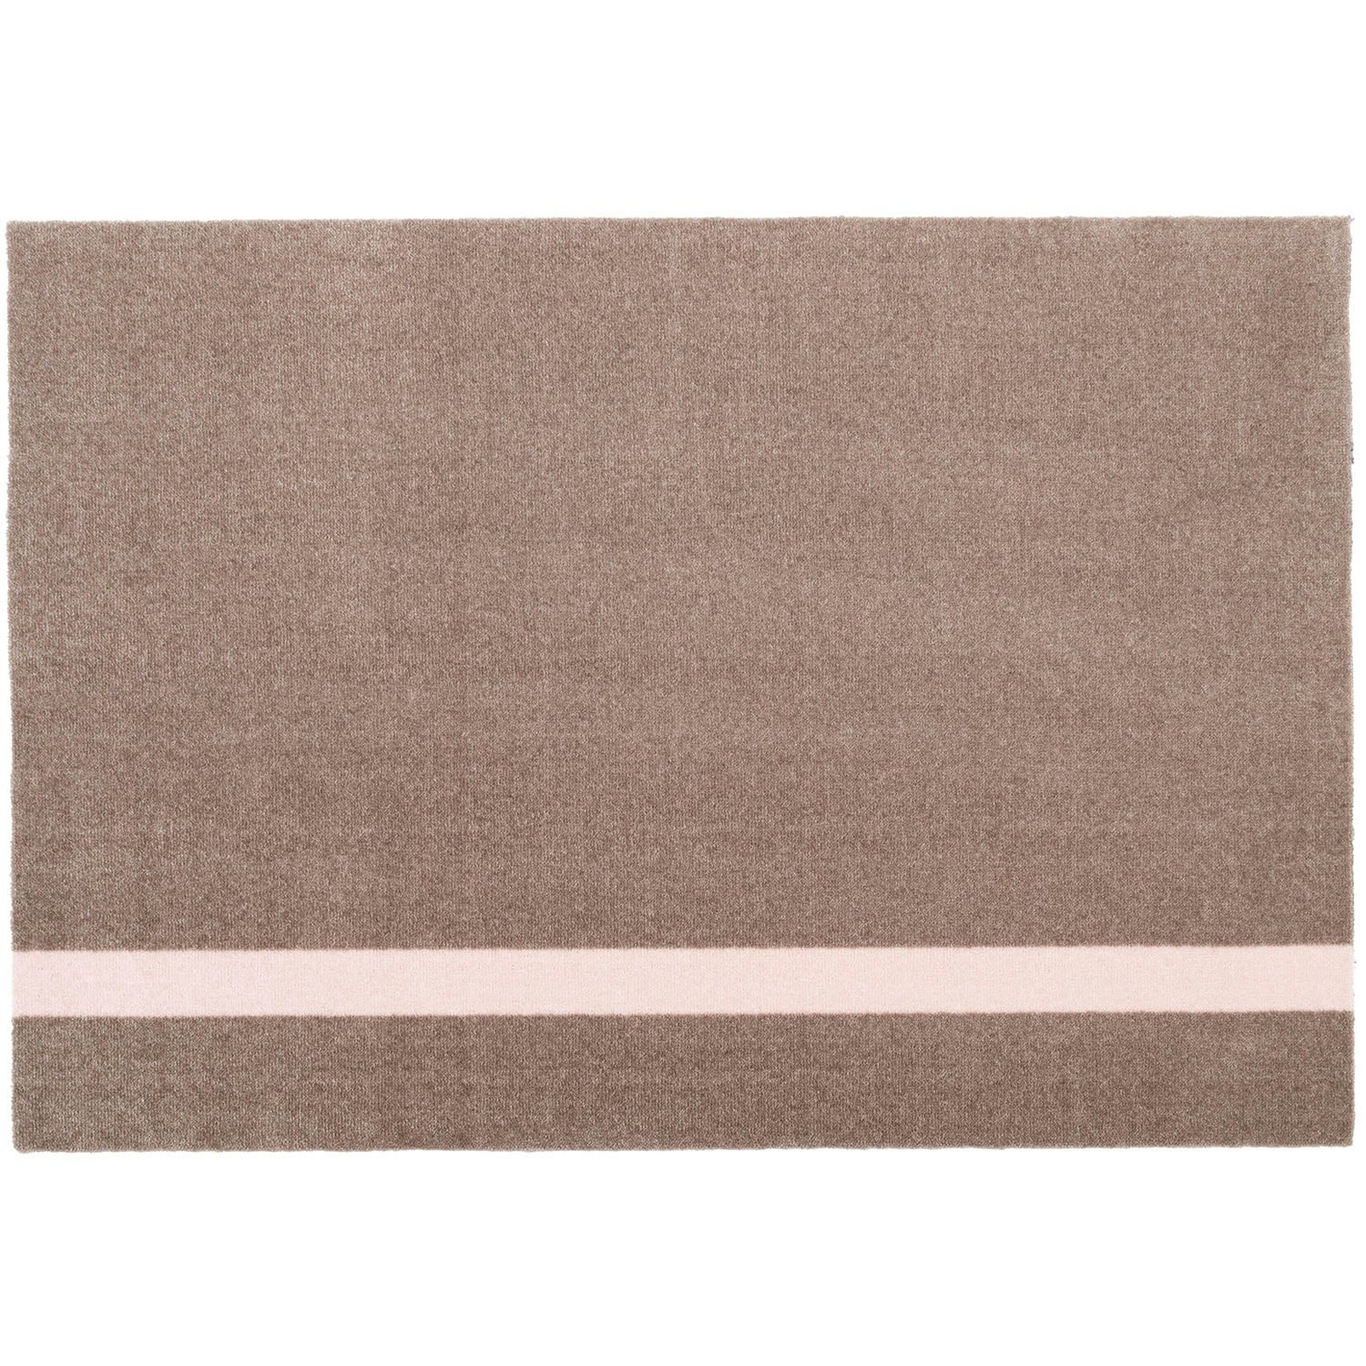 Stripes Teppich Vertikal Sandfarben/Light Rose, 90x130 cm